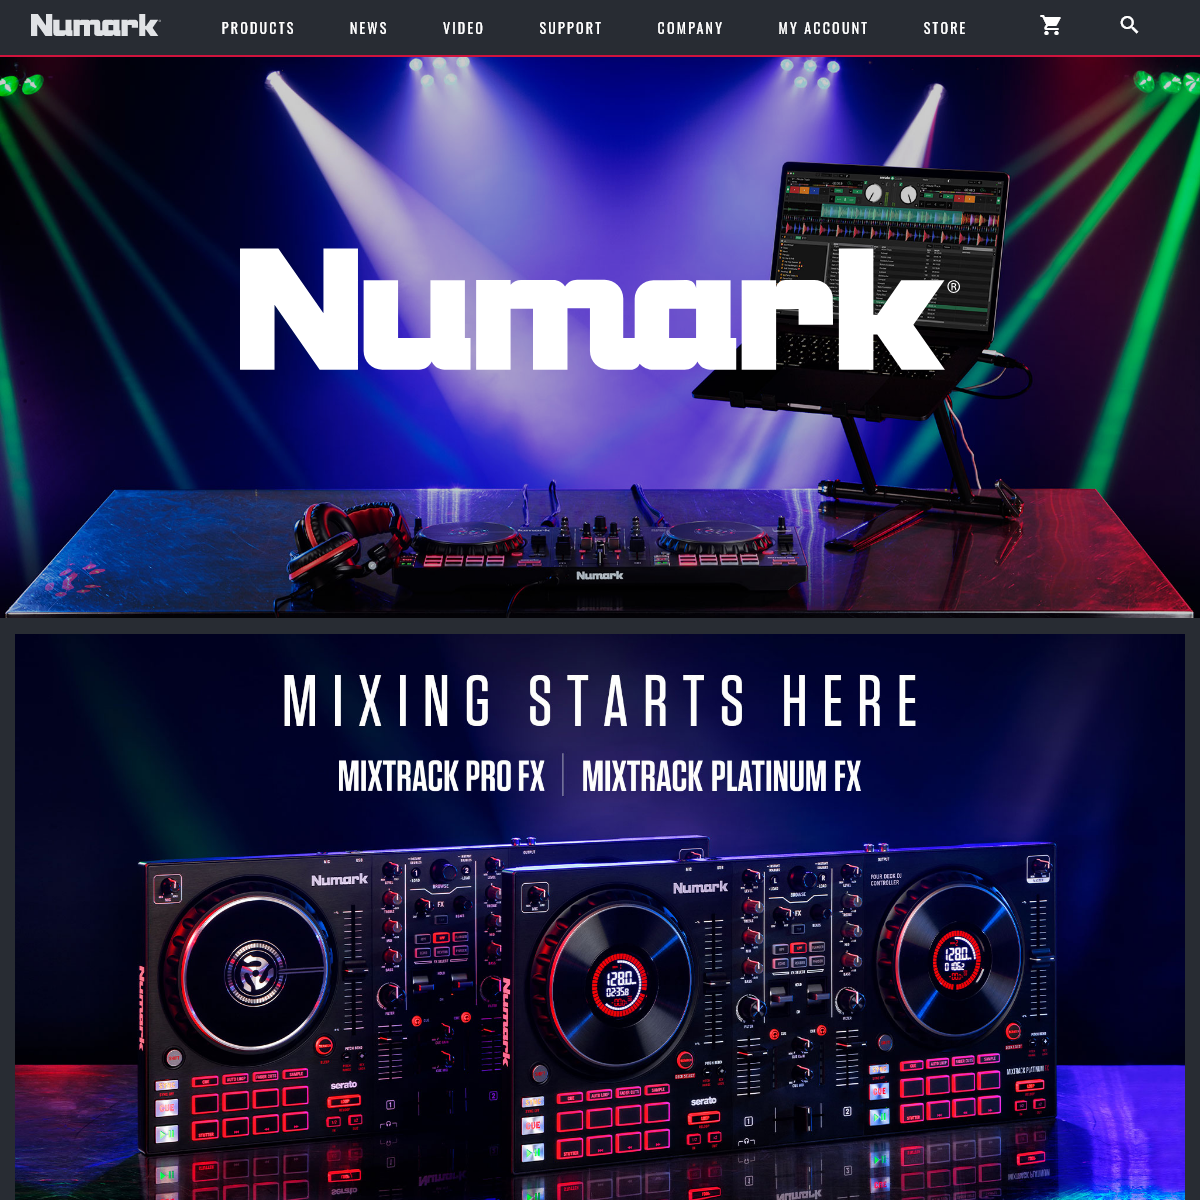 A complete backup of numark.com